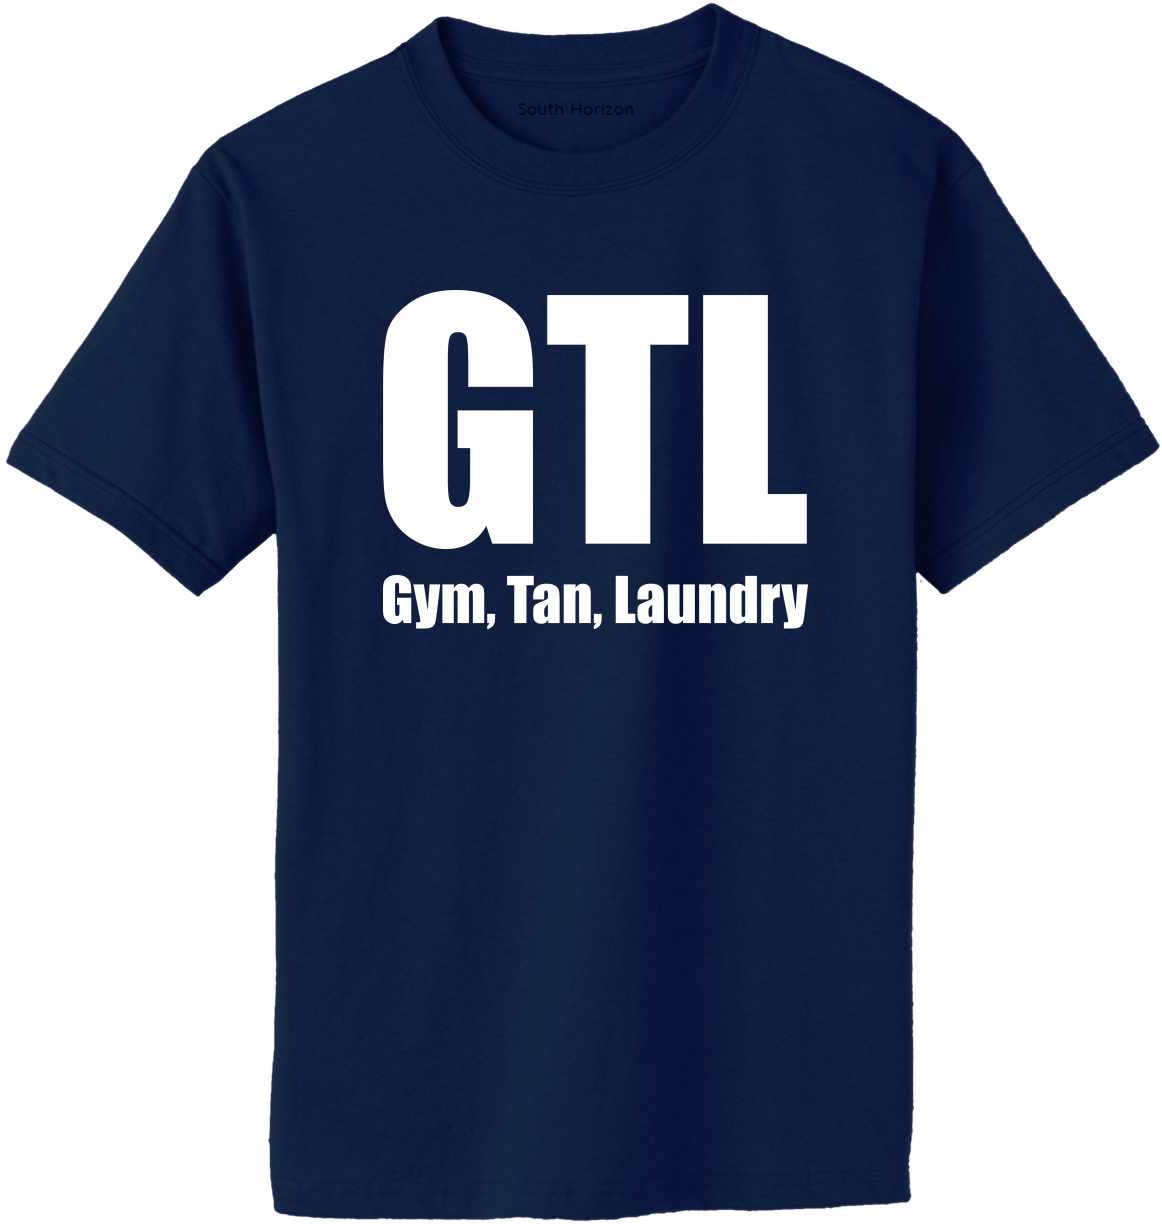 GTL Gym, Tan, Laundry Adult T-Shirt